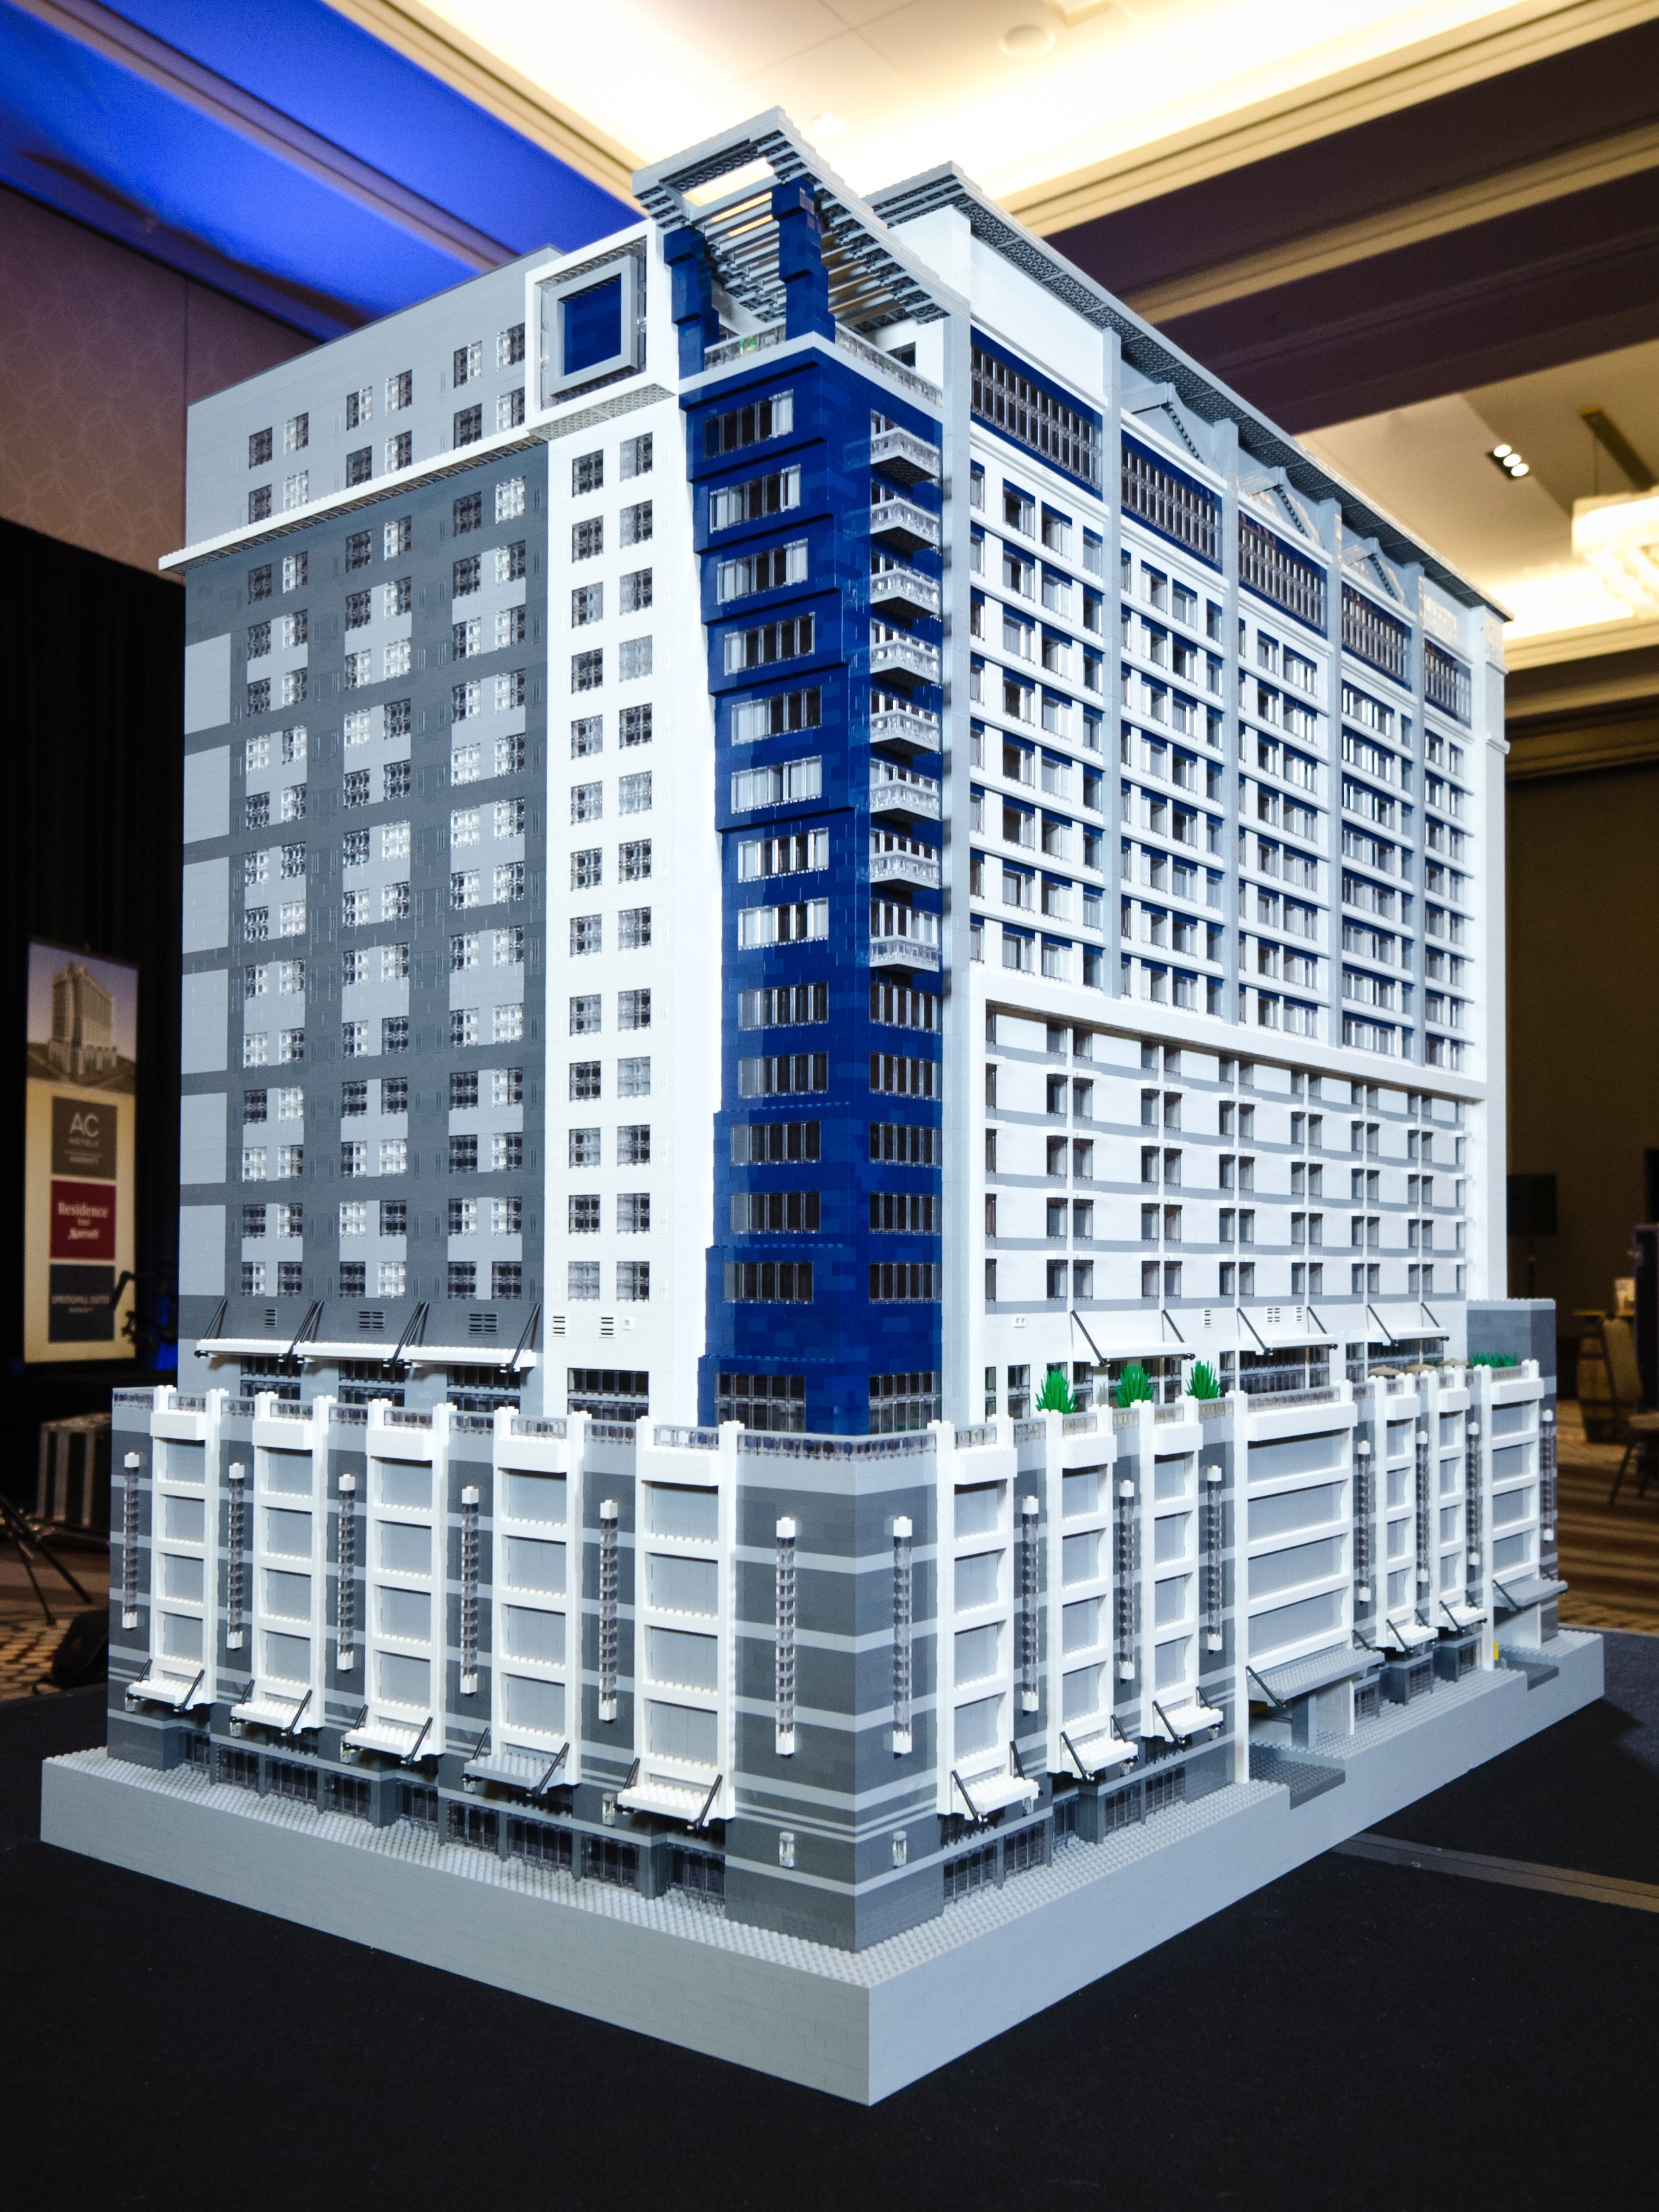 Marriott Nashville - Lego model